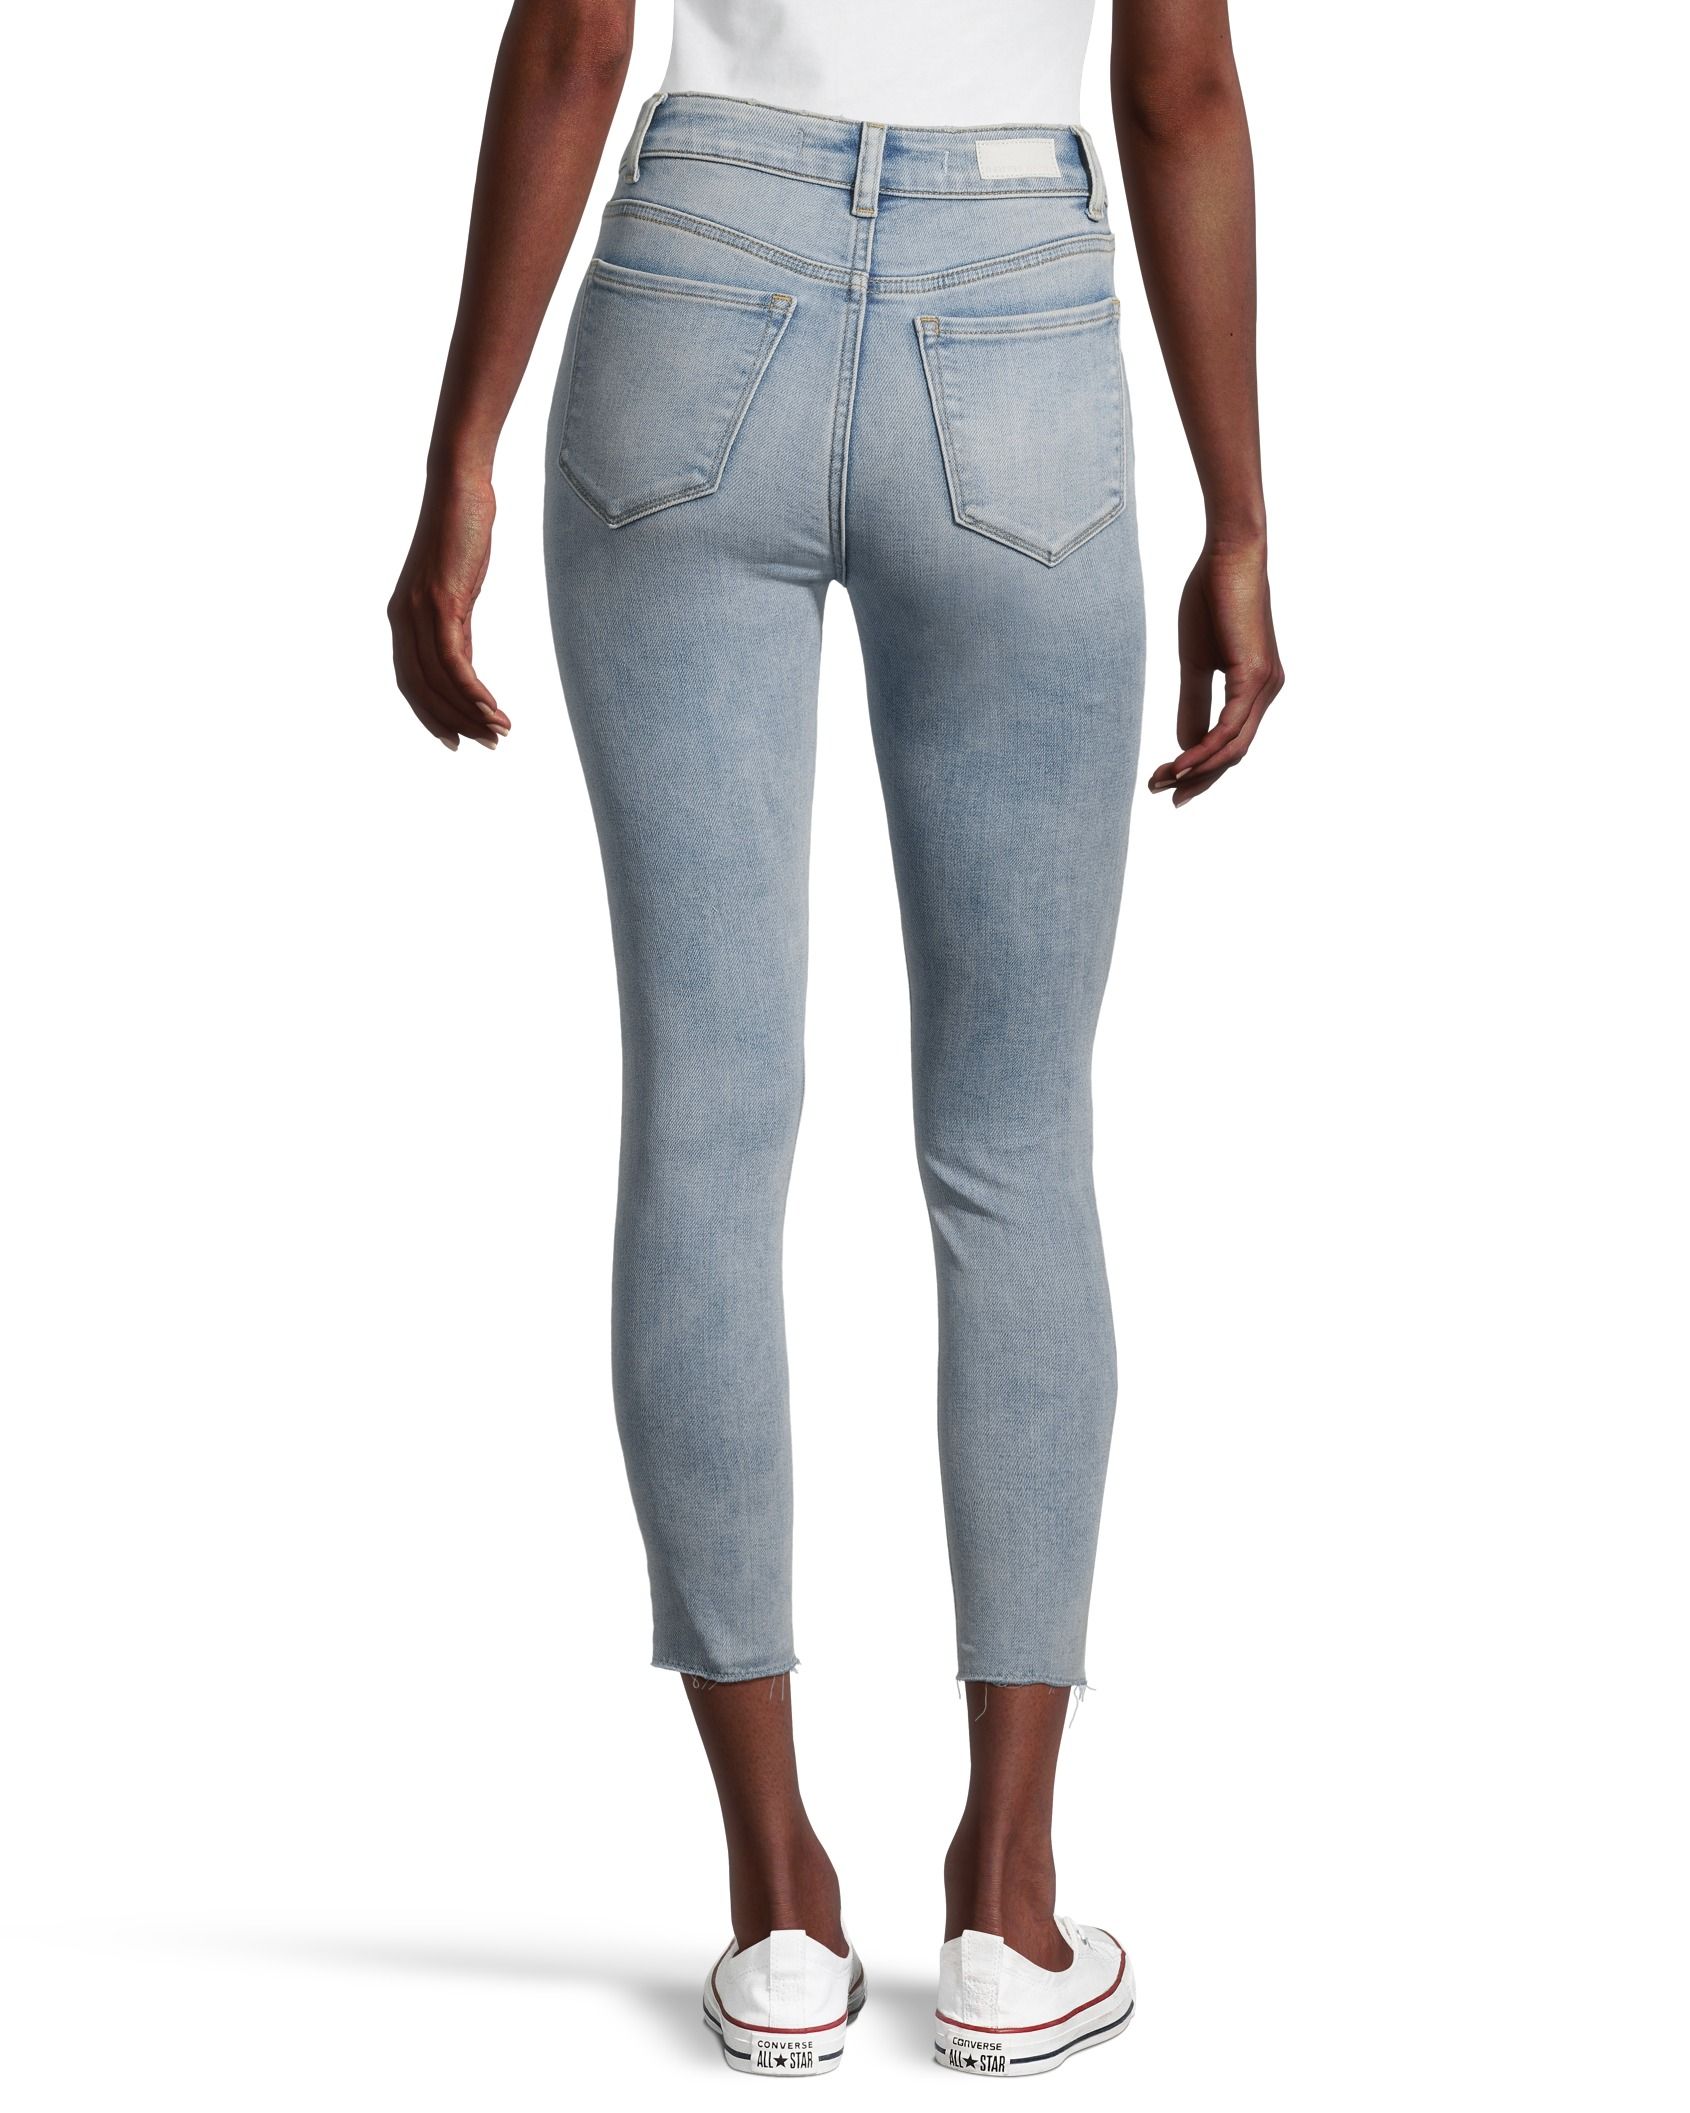 Denver Hayes Women's High Rise Skinny Jeans - Medium Indigo Wash